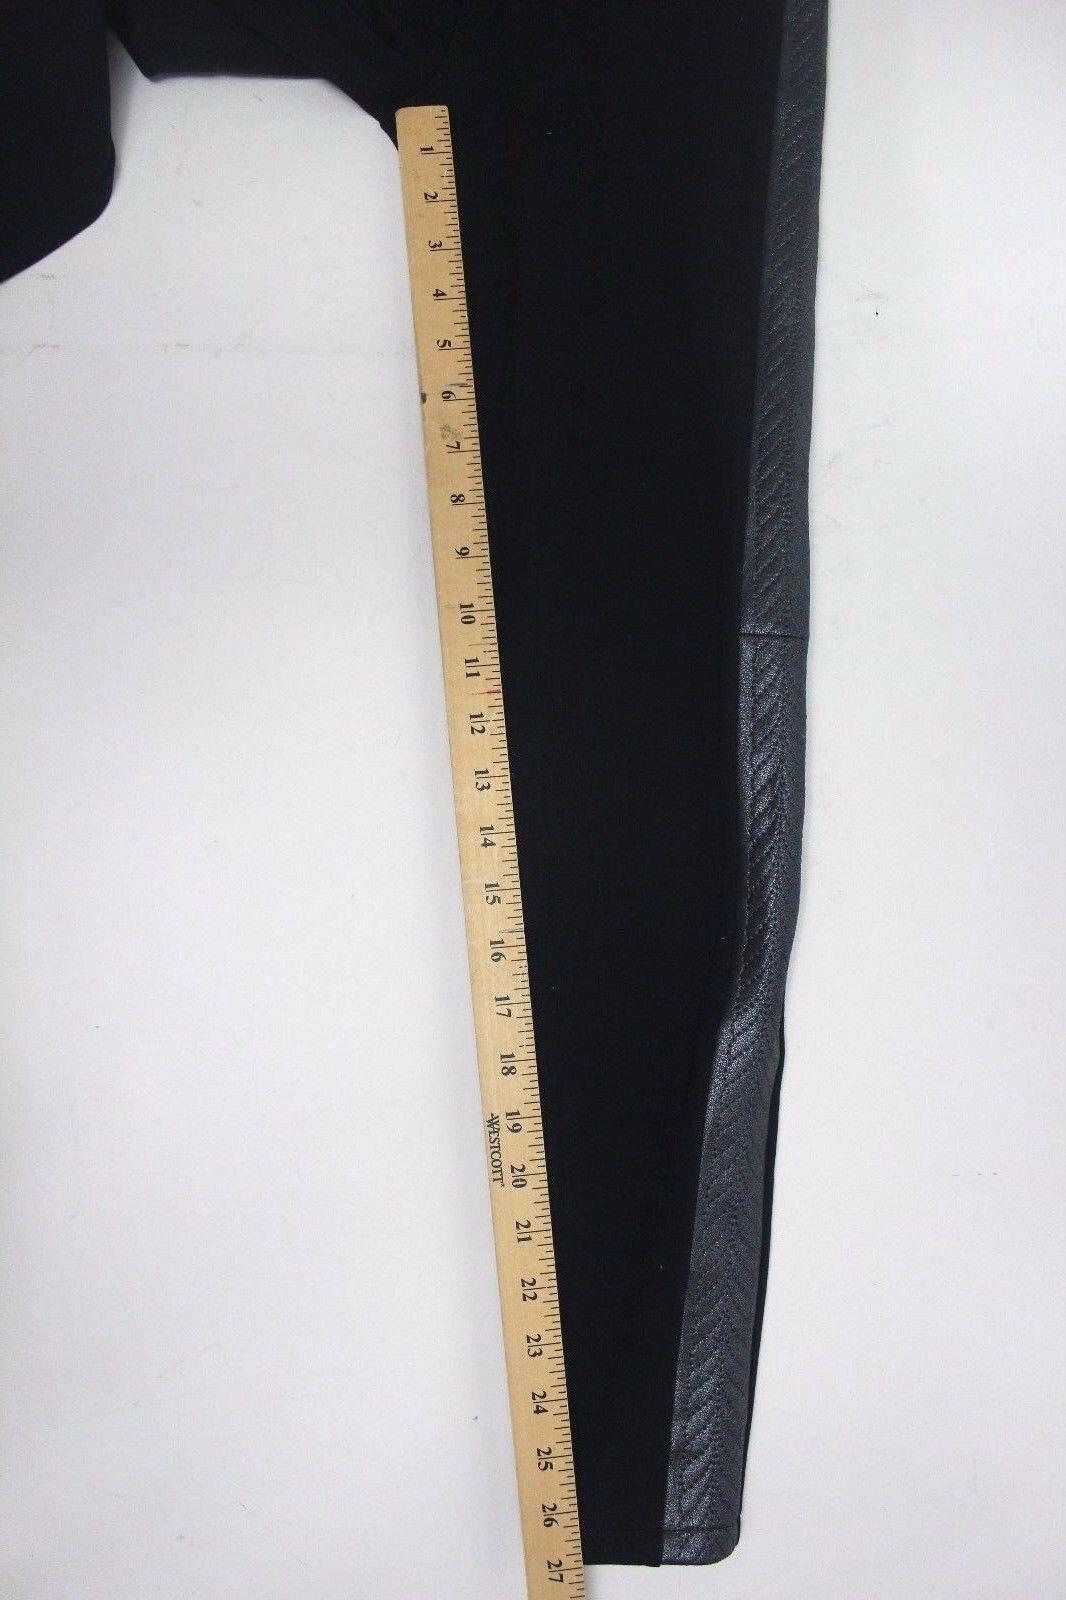 My Tribe Black %100 Leather Side Panel Legging Stretch Pants Size S - SVNYFancy